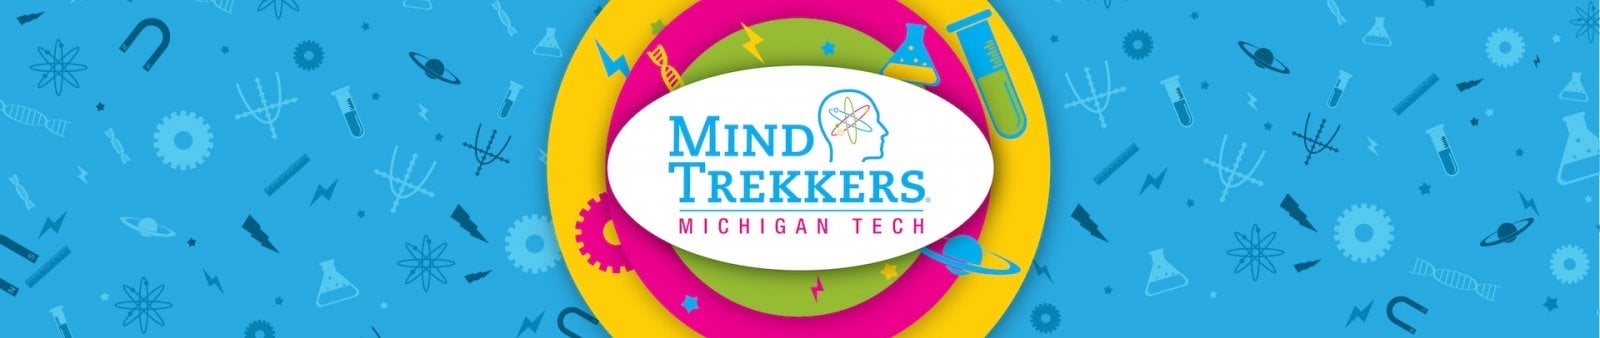 Michigan Tech Mind Trekkers logo